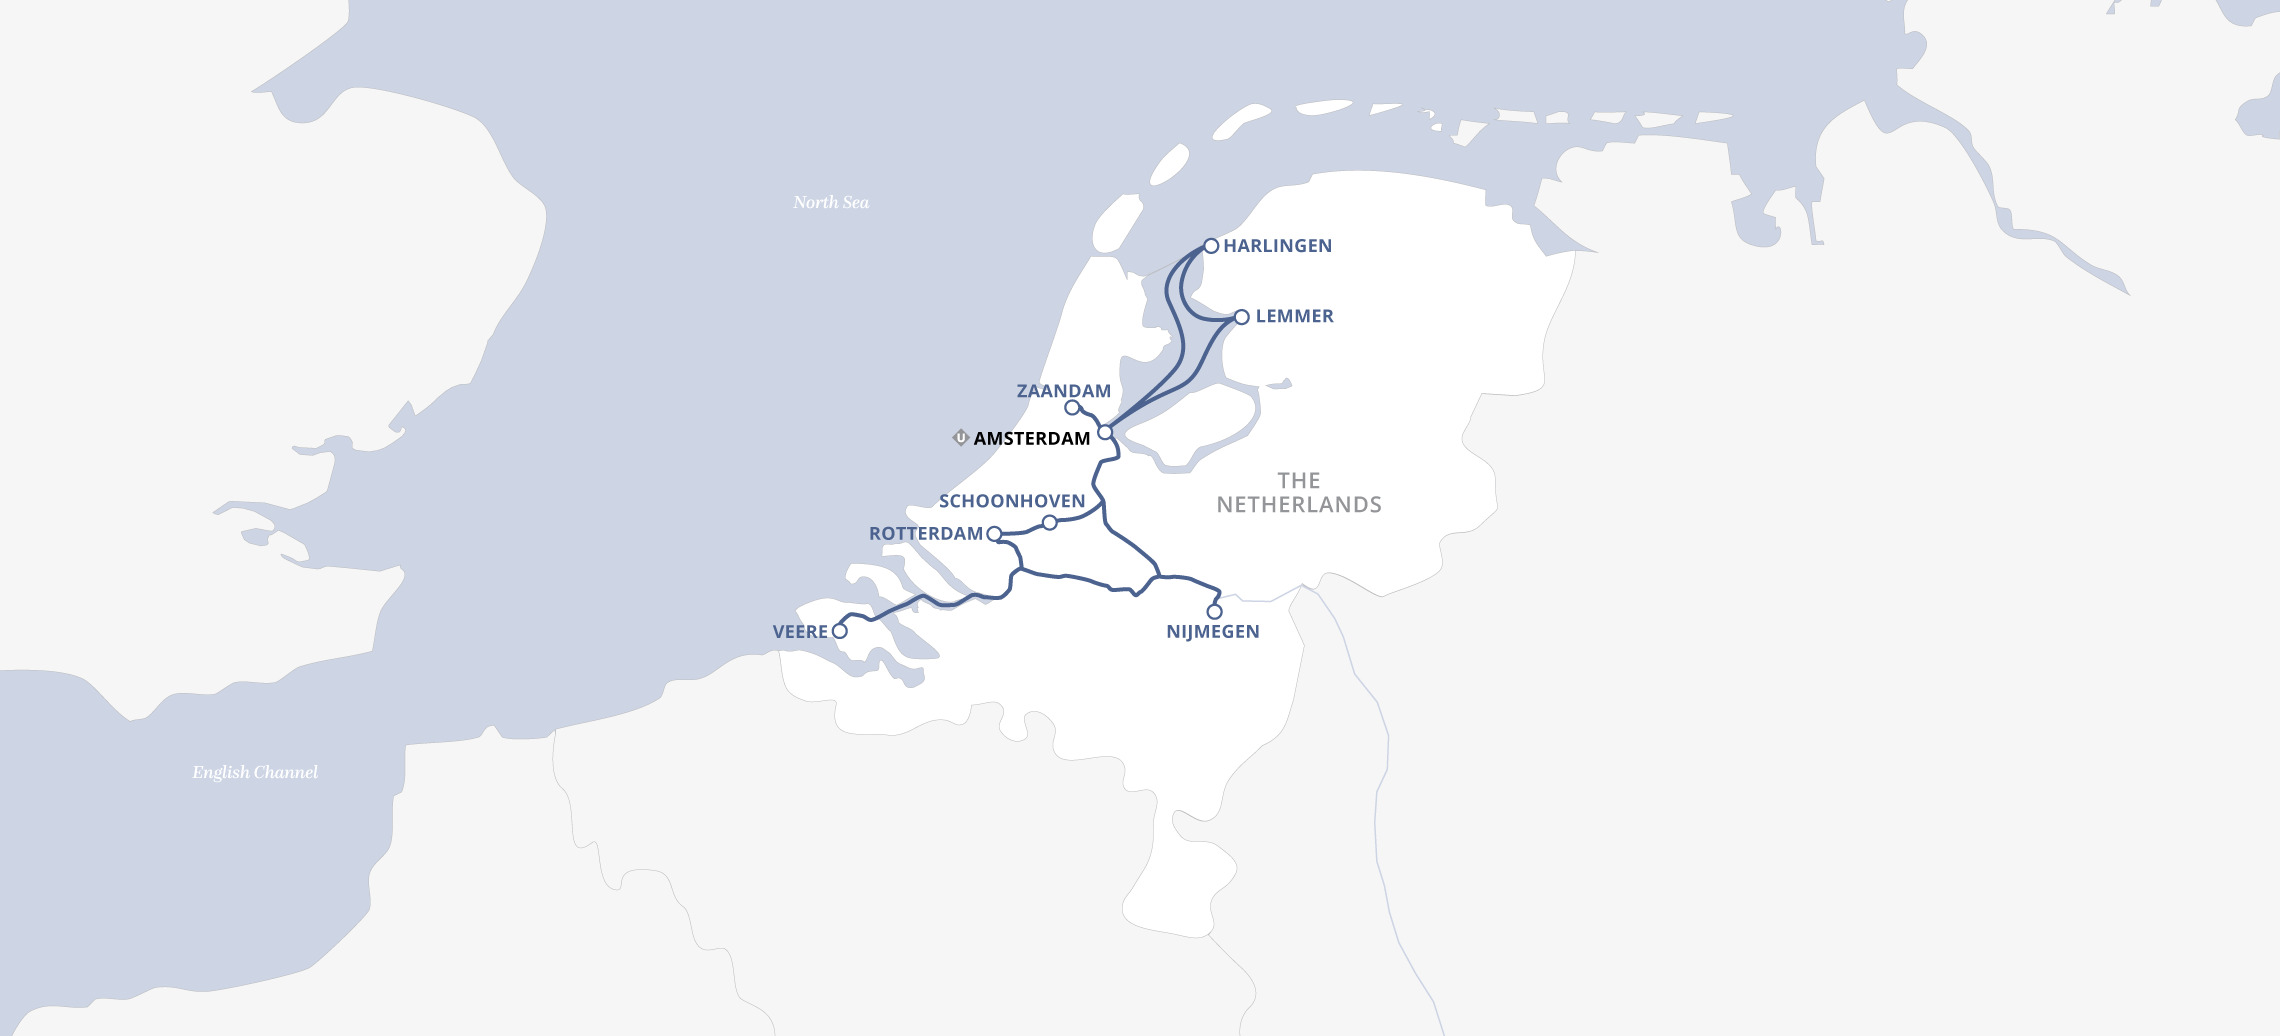 Uniworld River Cruise 8 Days Amsterdam To Amsterdam Map 8261 